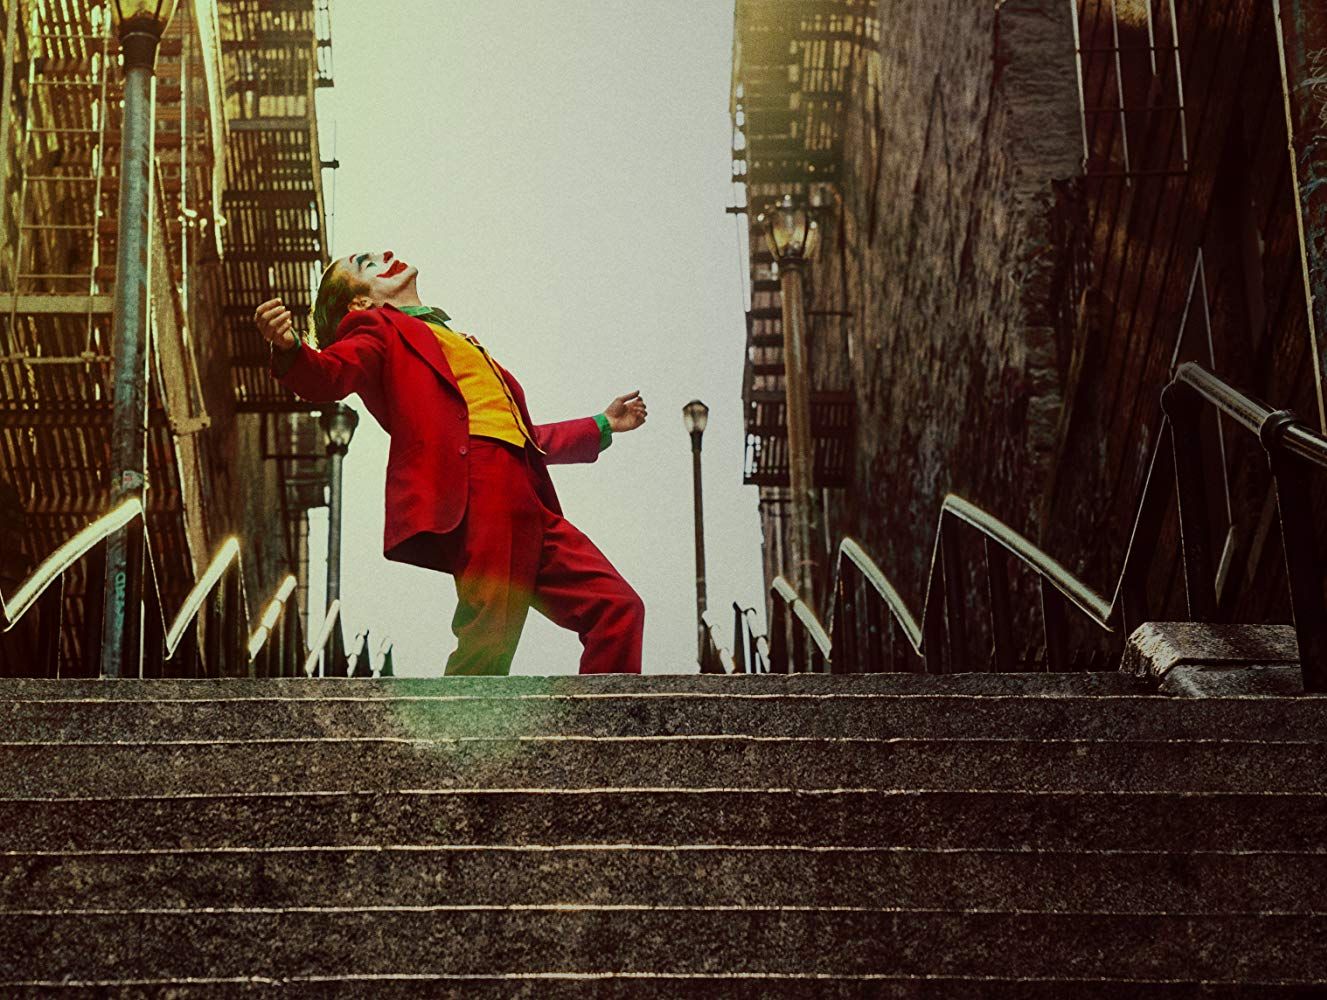 Escaleras película 'Joker' fin fotografías Instagram